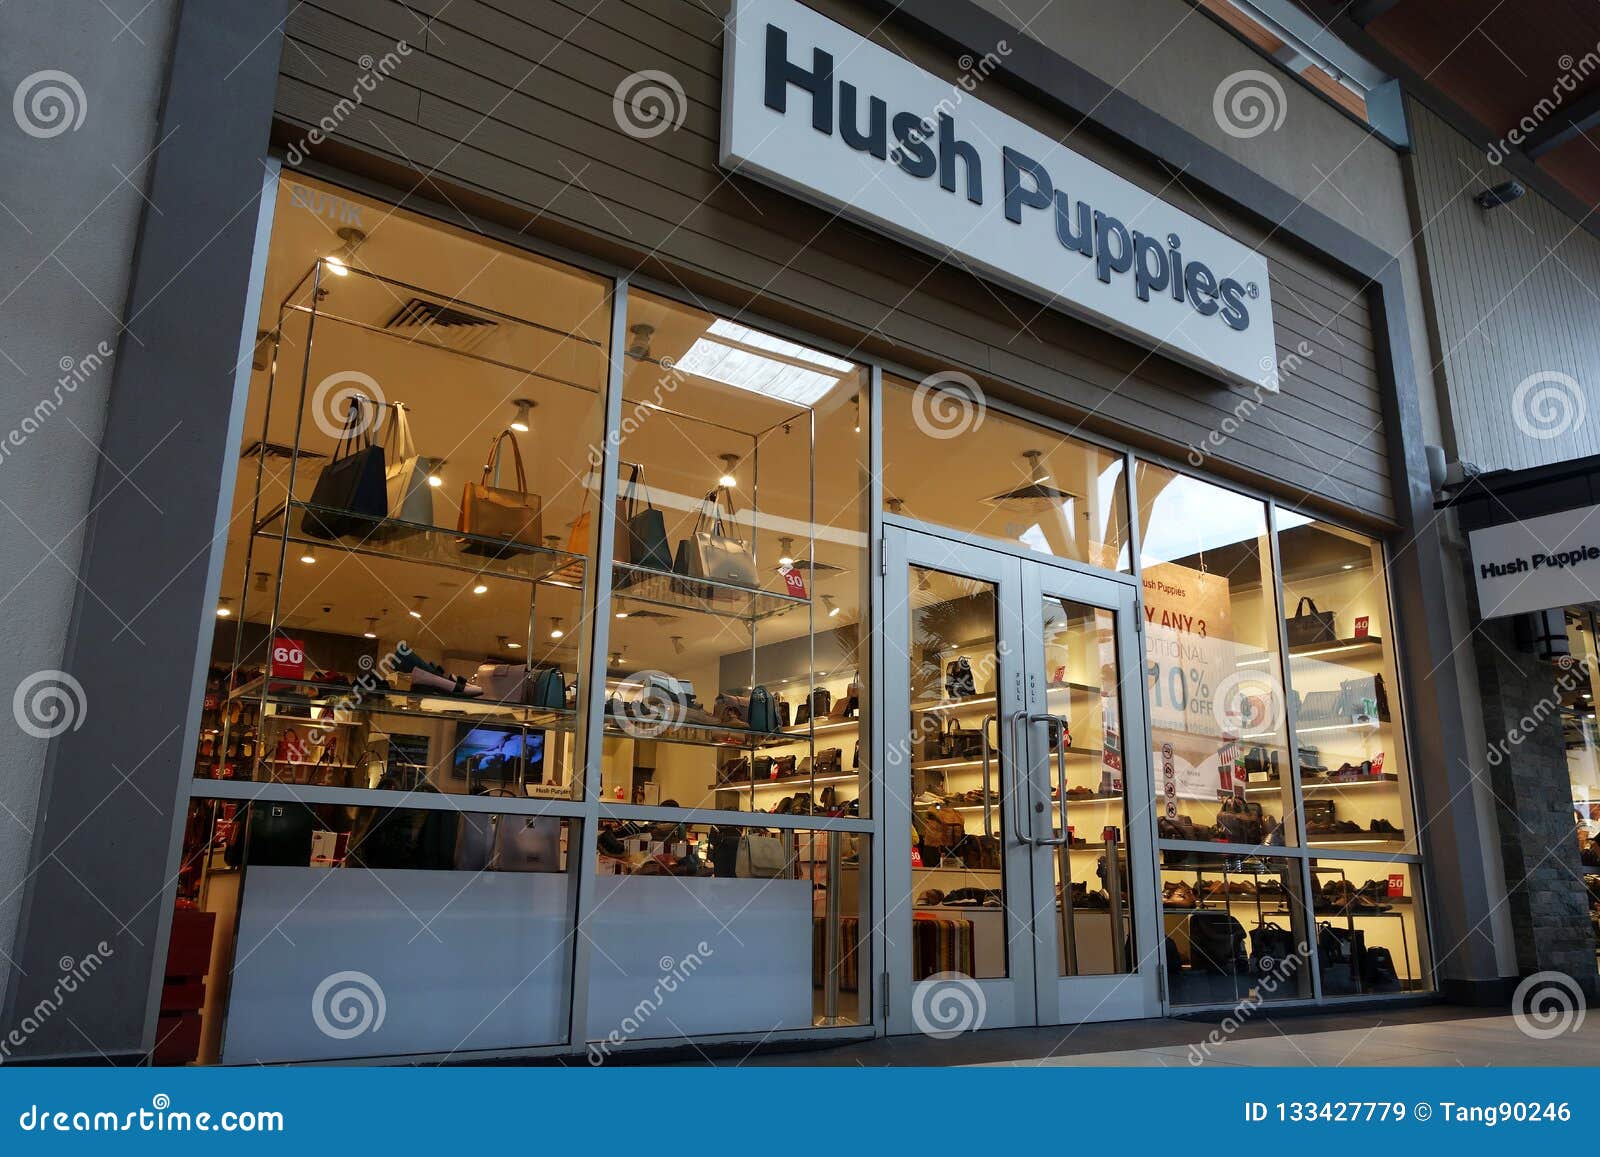 hush puppies retailers